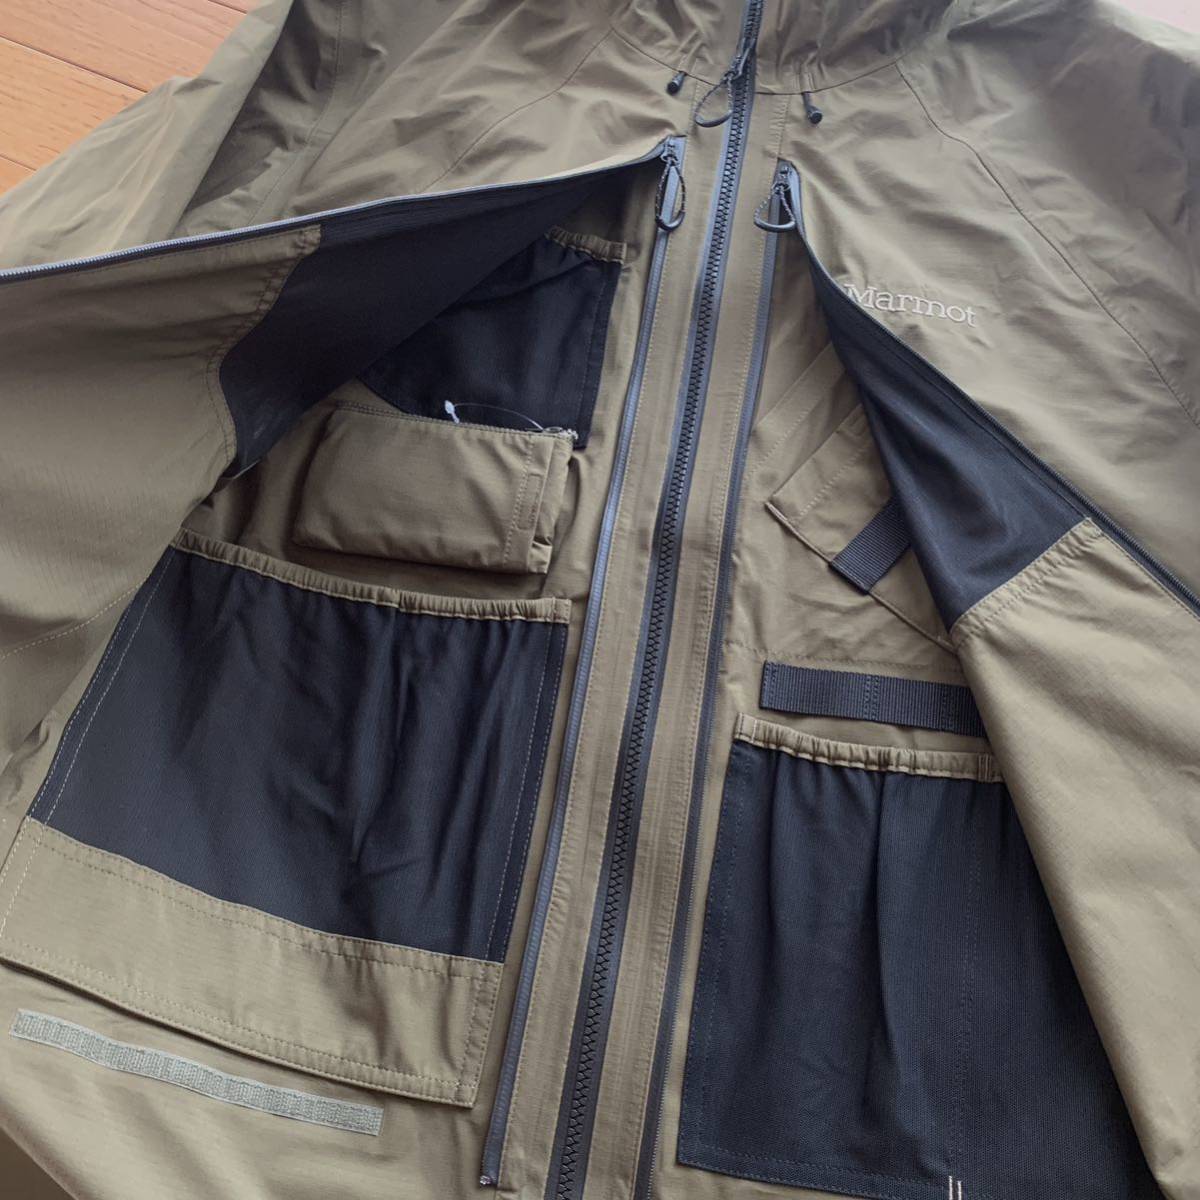 Name x Marmot Tec nylon coat name Marmot jacket mountain parka long height multifunction multi pocket outdoor 